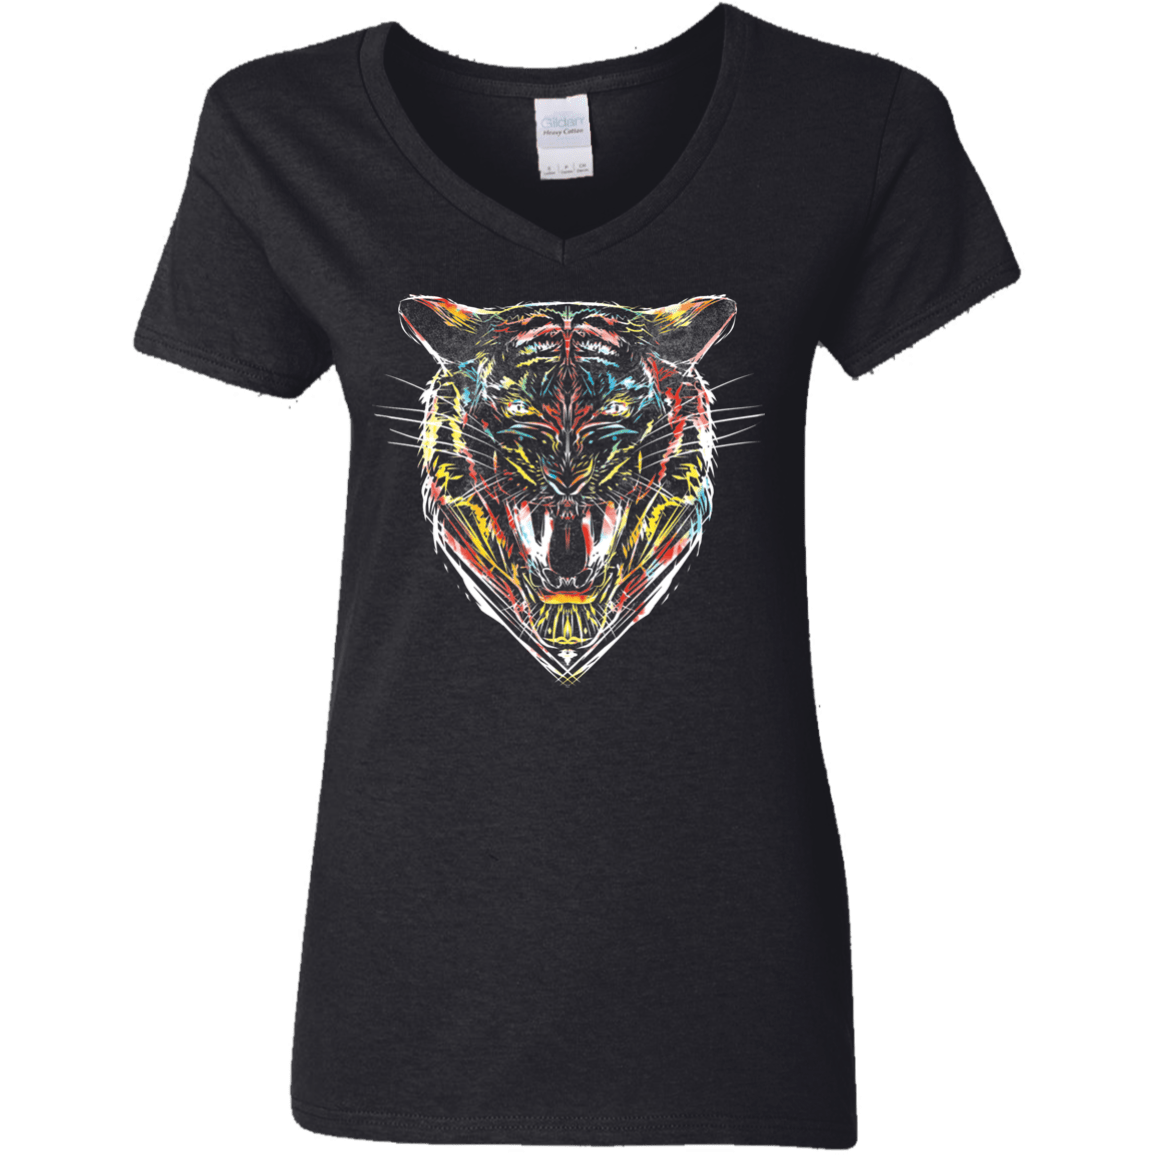 Stencil Tiger Women's V-Neck T-Shirt